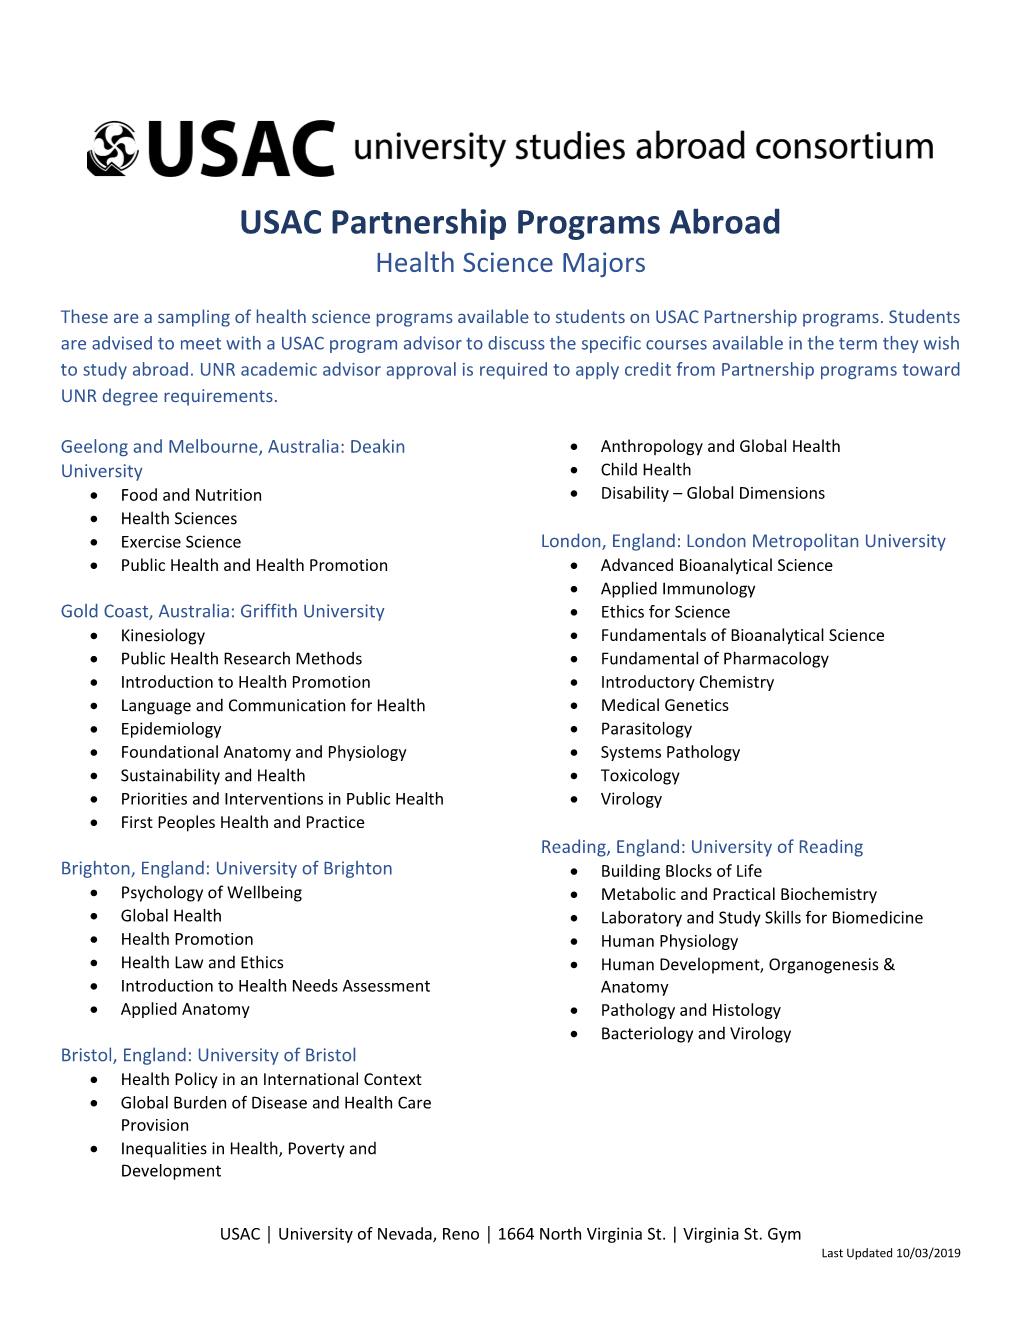 USAC Partnership Programs Abroad Health Science Majors